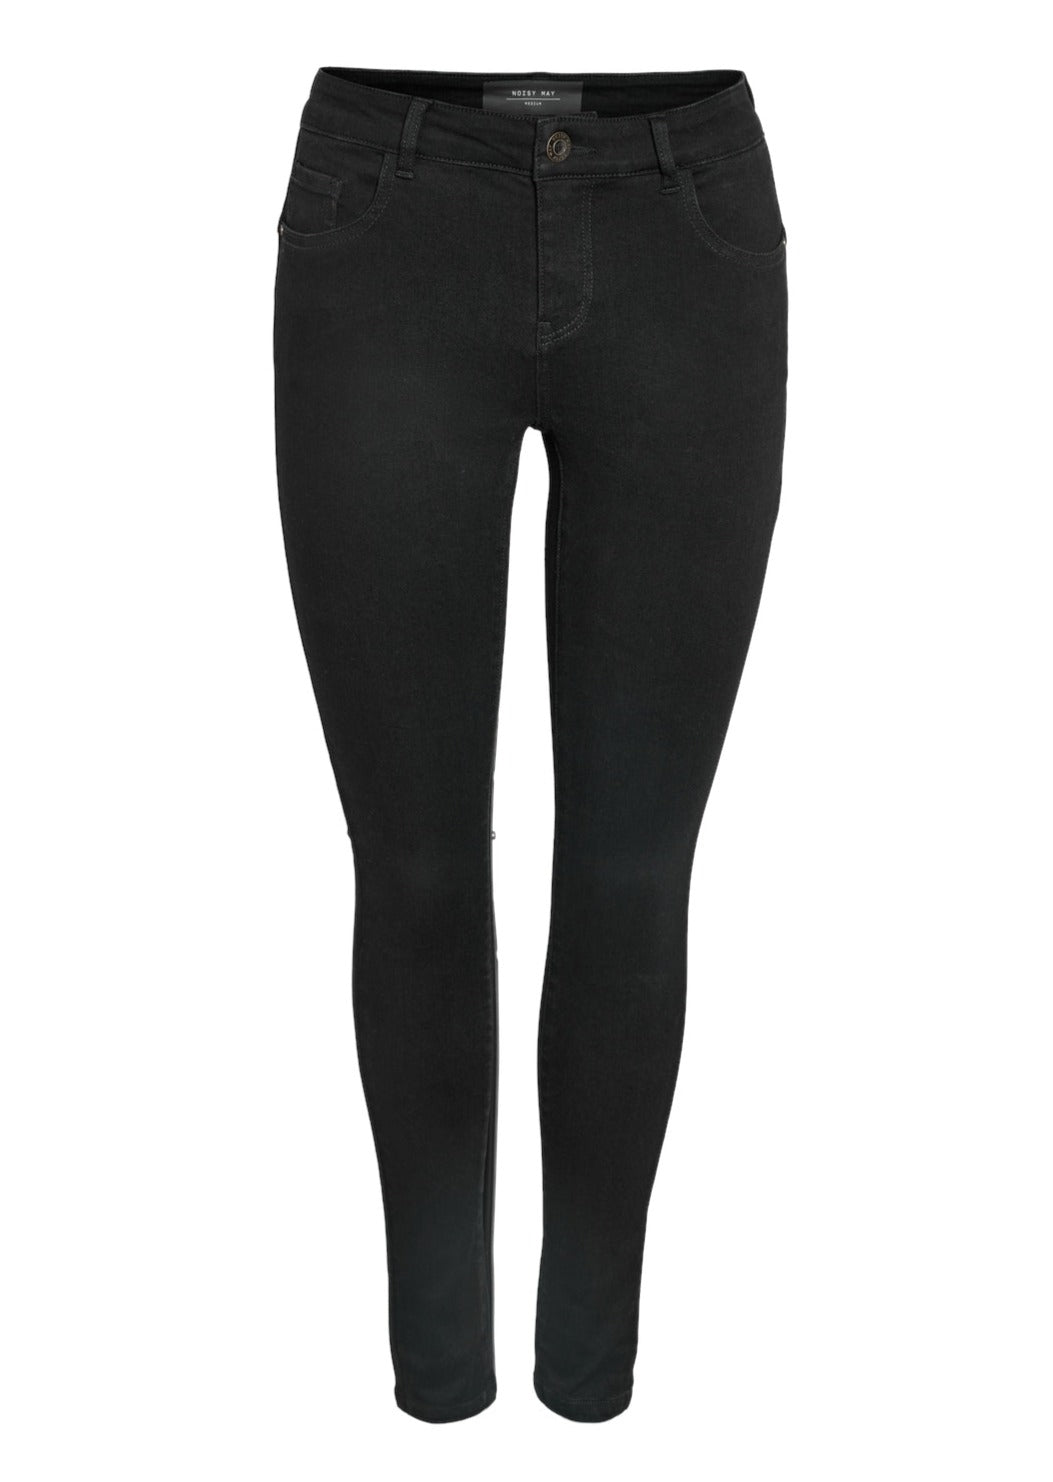 Jen Shaper Jeans - Black Denim - for kvinde - NOISY MAY - Jeans